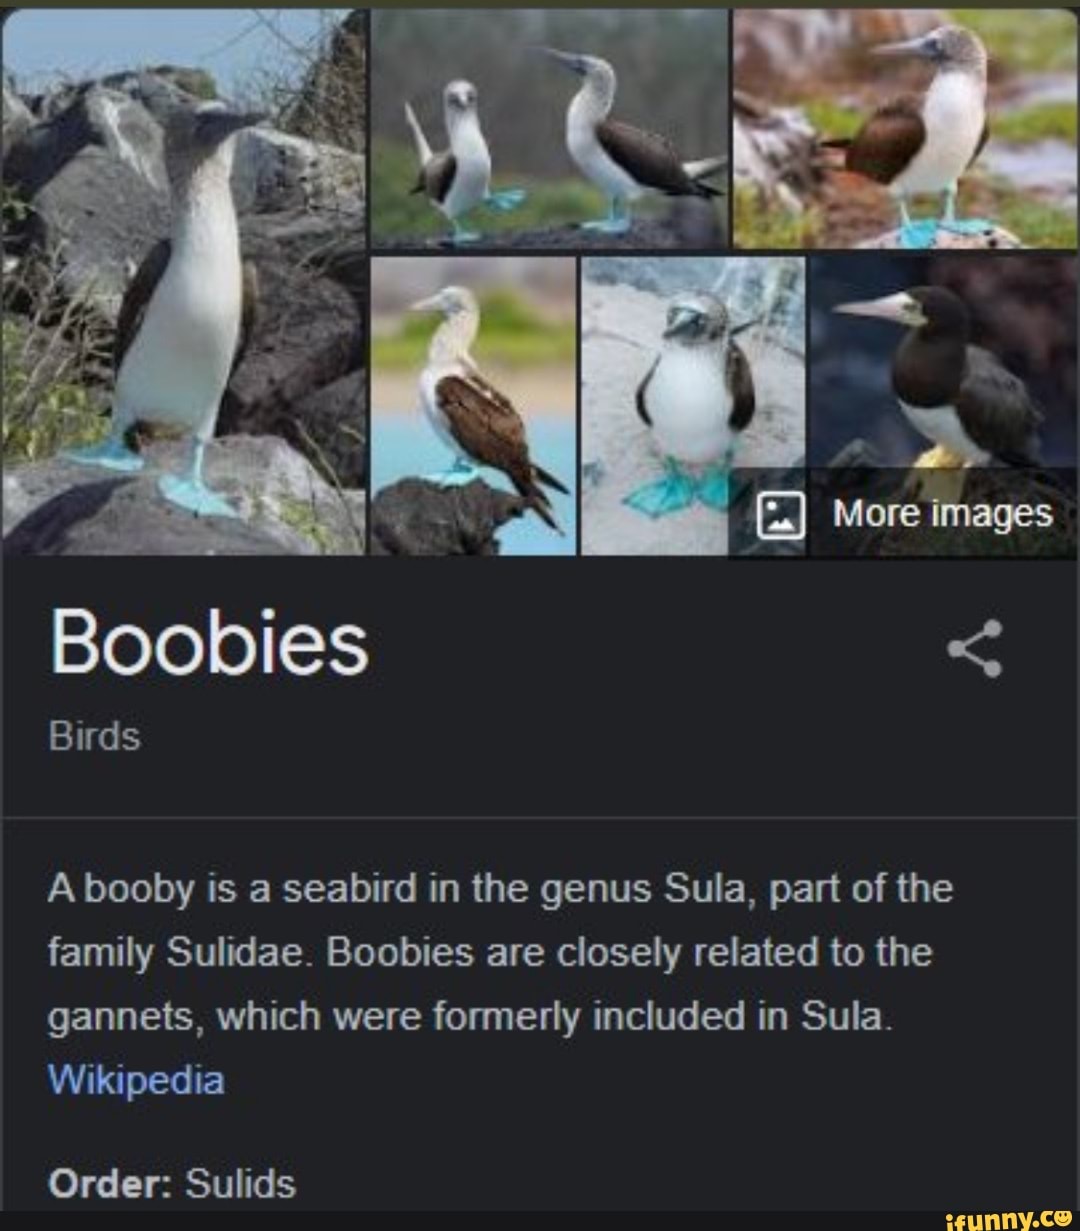 Booby - Wikipedia